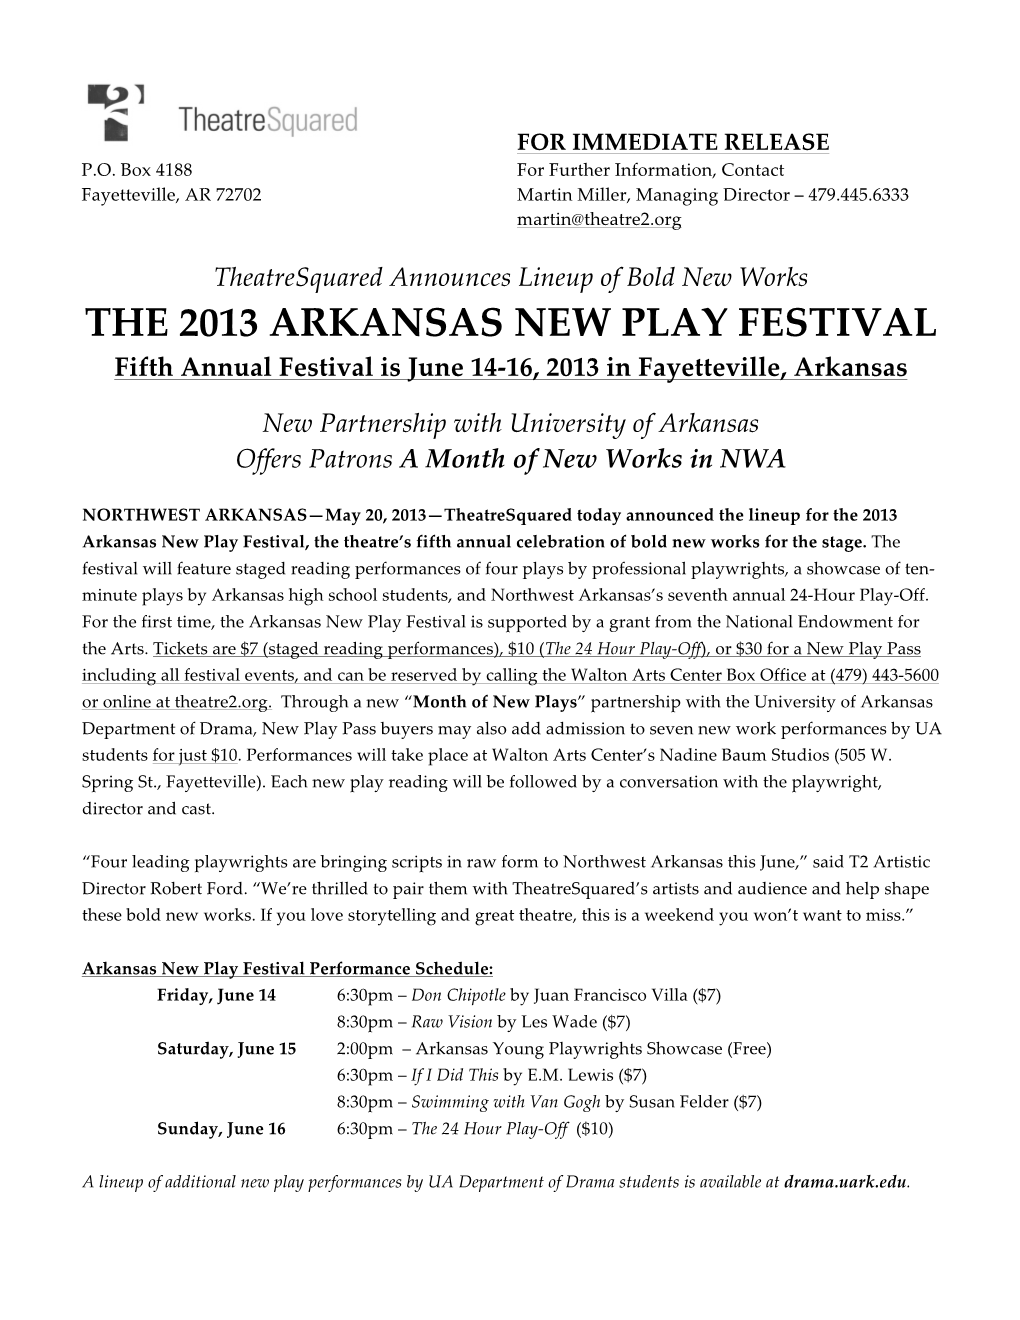 THE 2013 ARKANSAS NEW PLAY FESTIVAL Fifth Annual Festival Is June 14-16, 2013 in Fayetteville, Arkansas